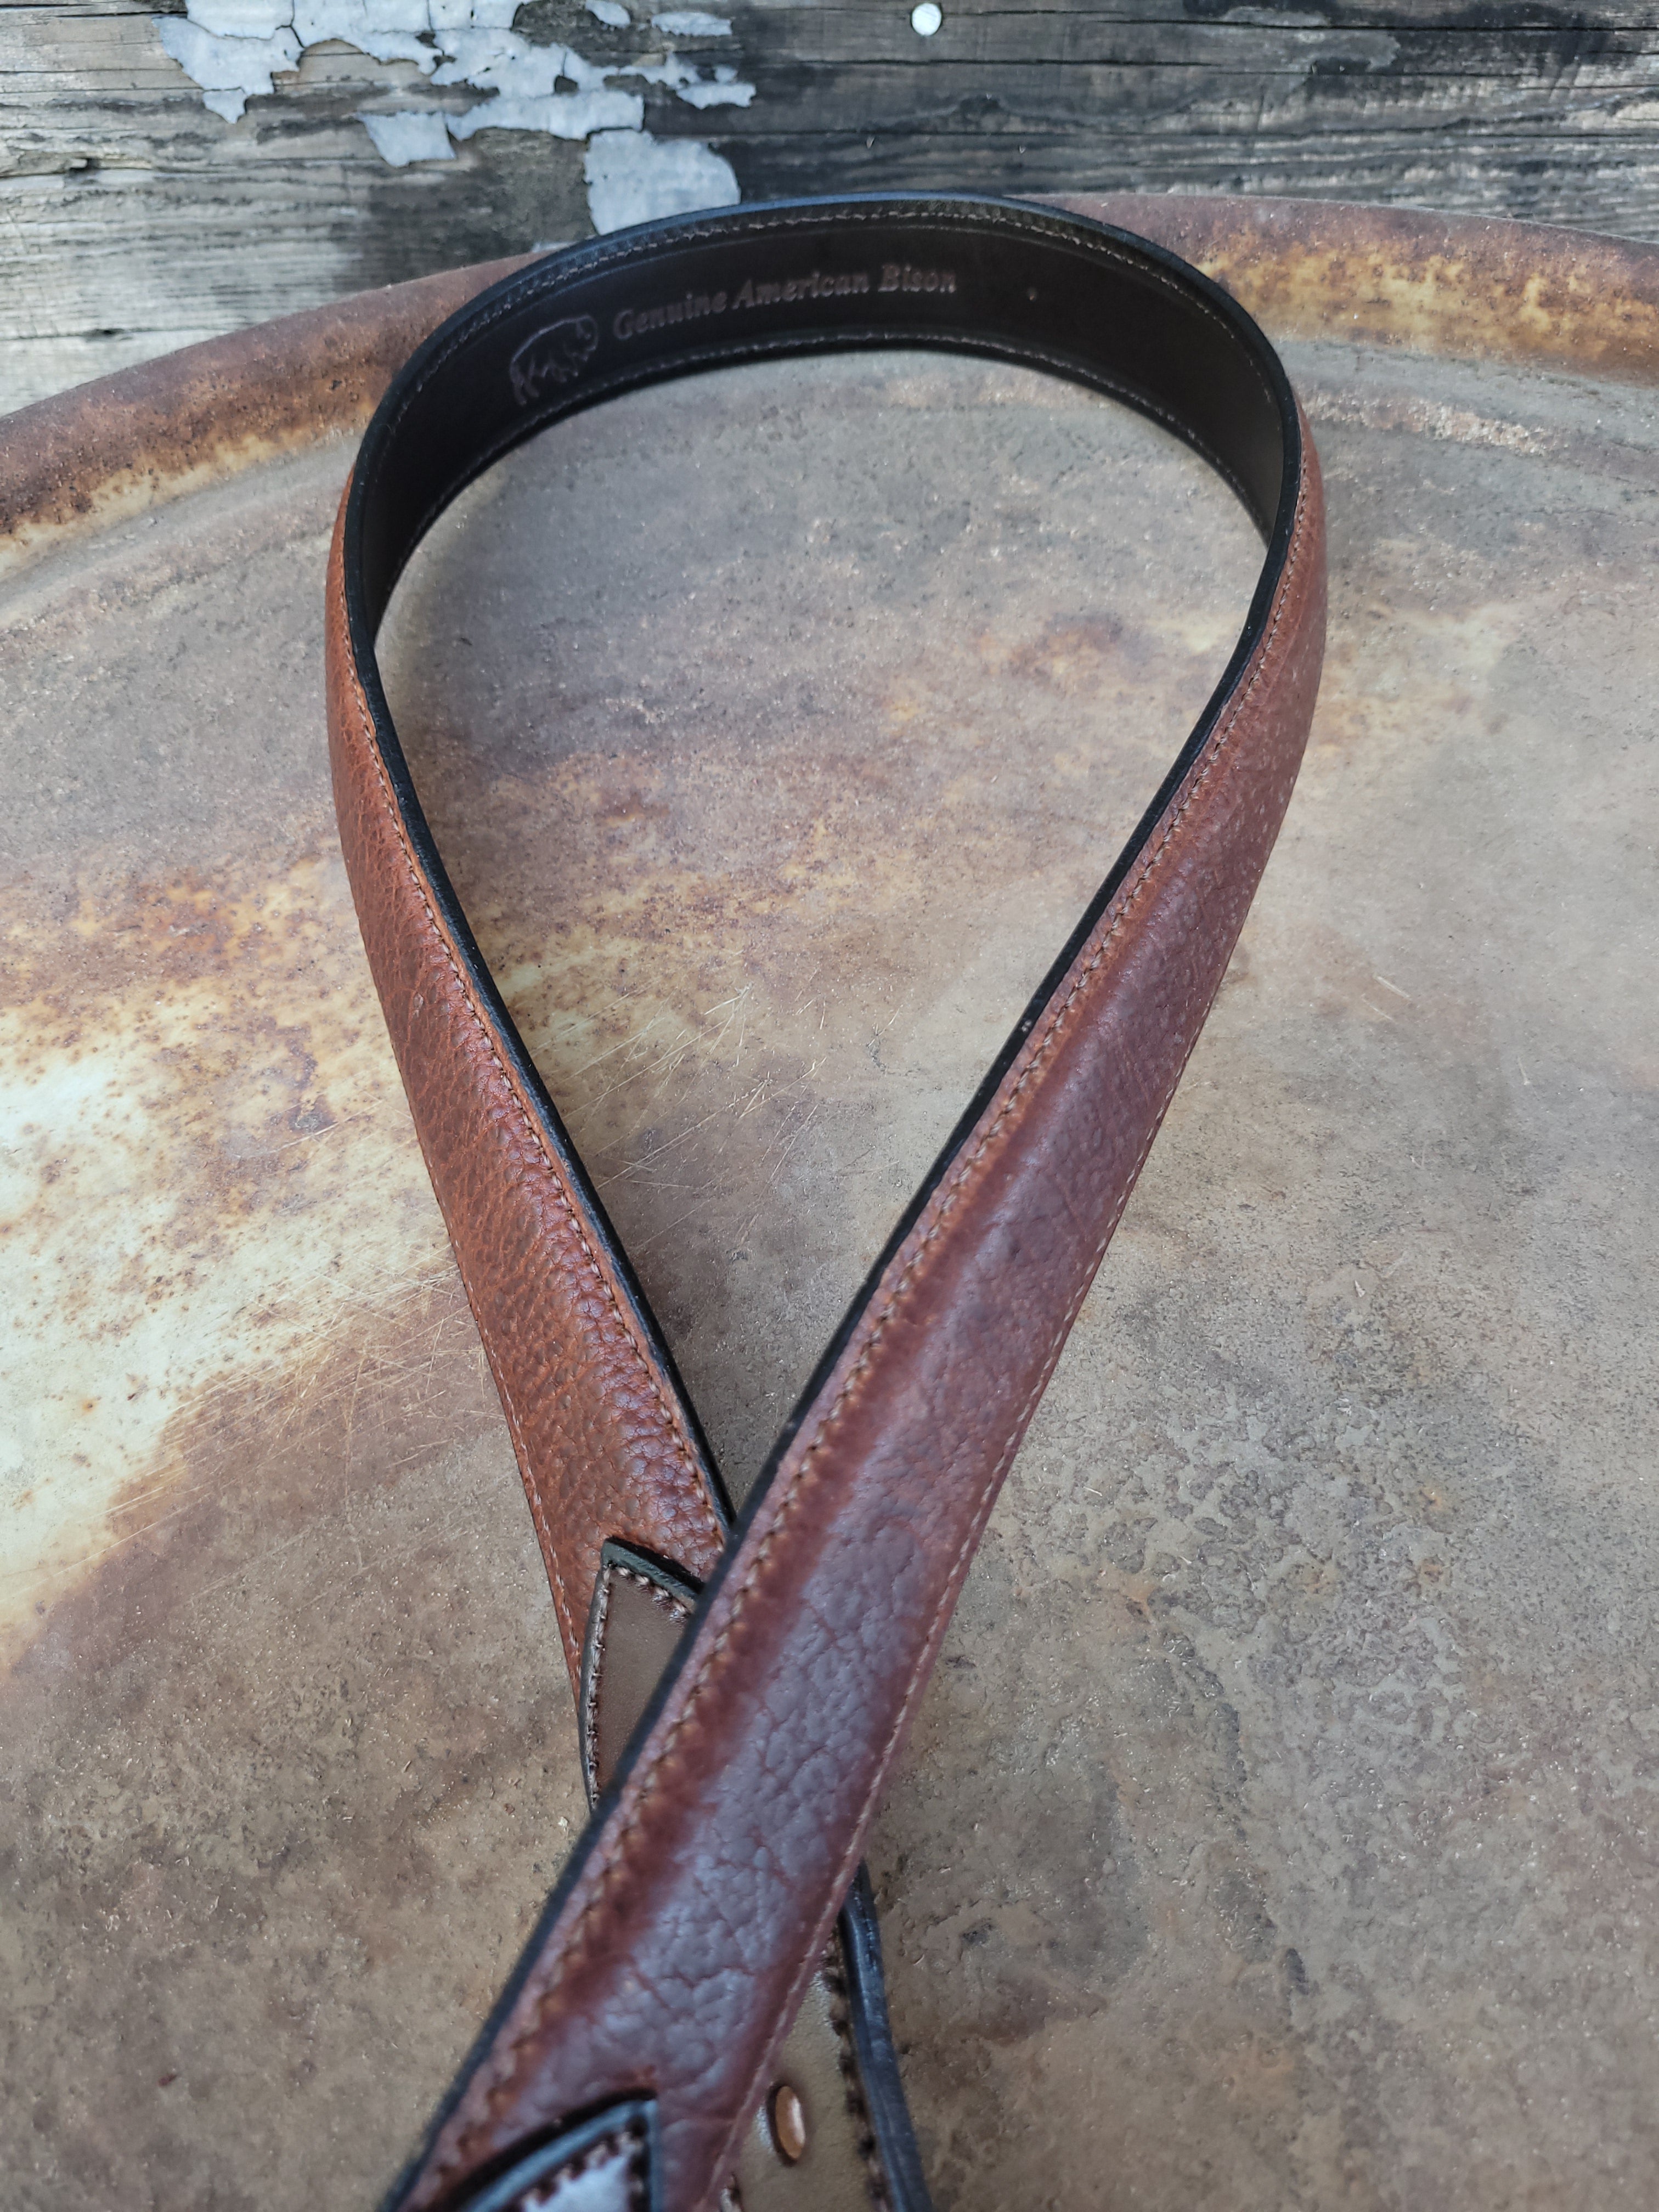 Boston Leather - Saddle Stitched Bison Leather Belt - 1.5